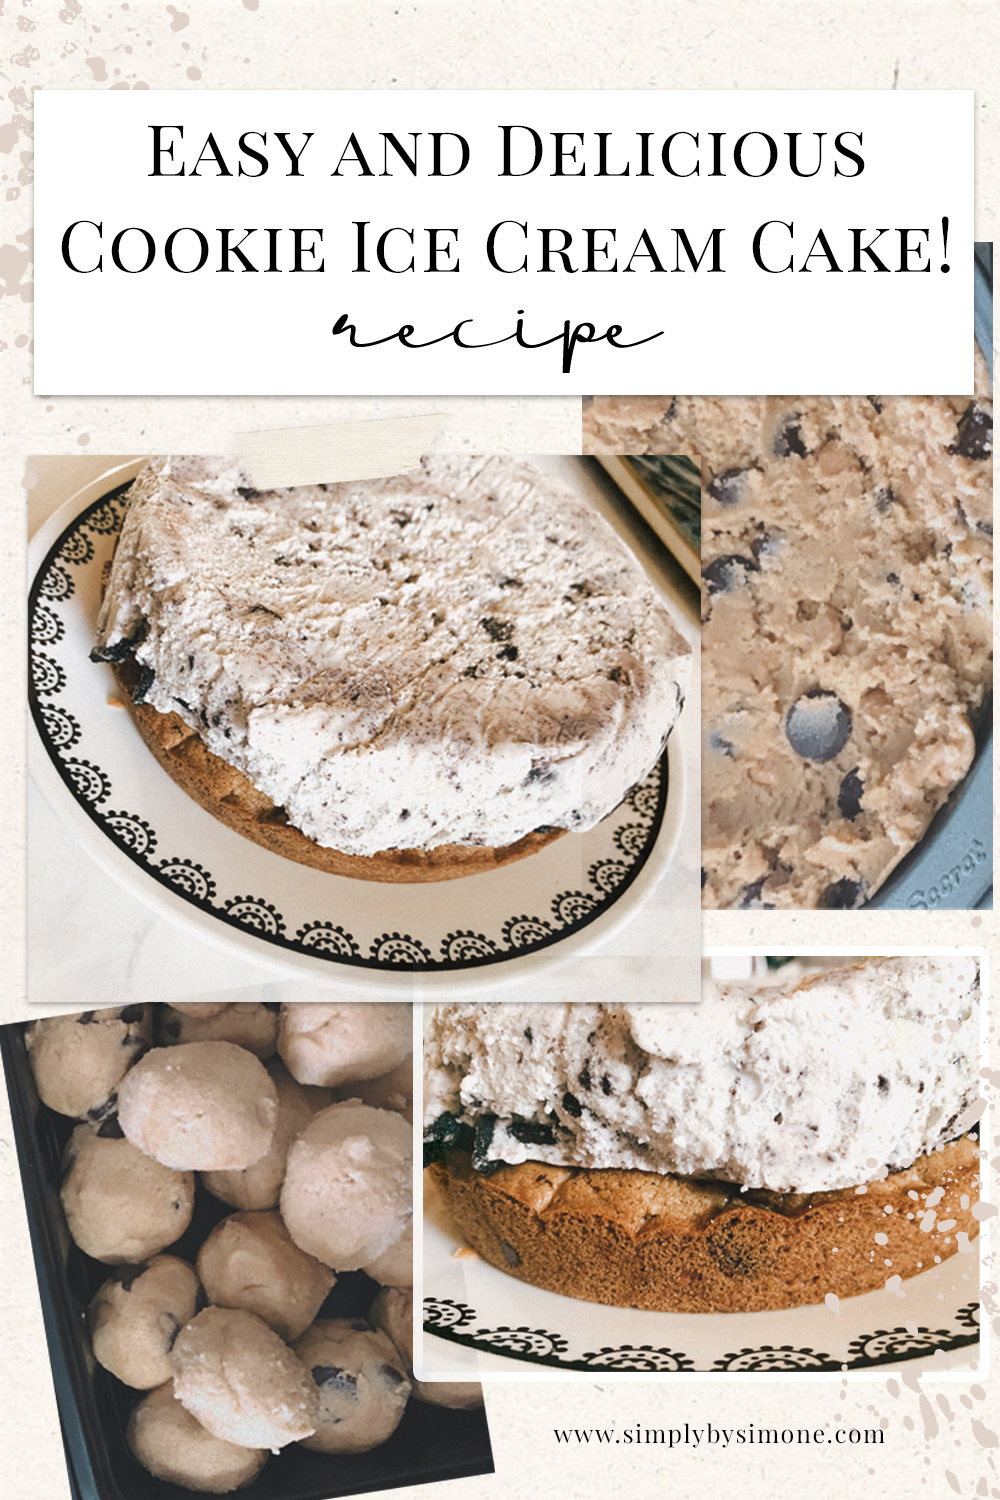 Easy and Delicious Cookie Ice Cream Cake Recipe #recipe #food #foodie #dessert #birthdaycake #icecreamcake #cookiecake #cookieicecreamcake #cake #pie #cookiecakerecipe #simplybysimone Simone Piliero